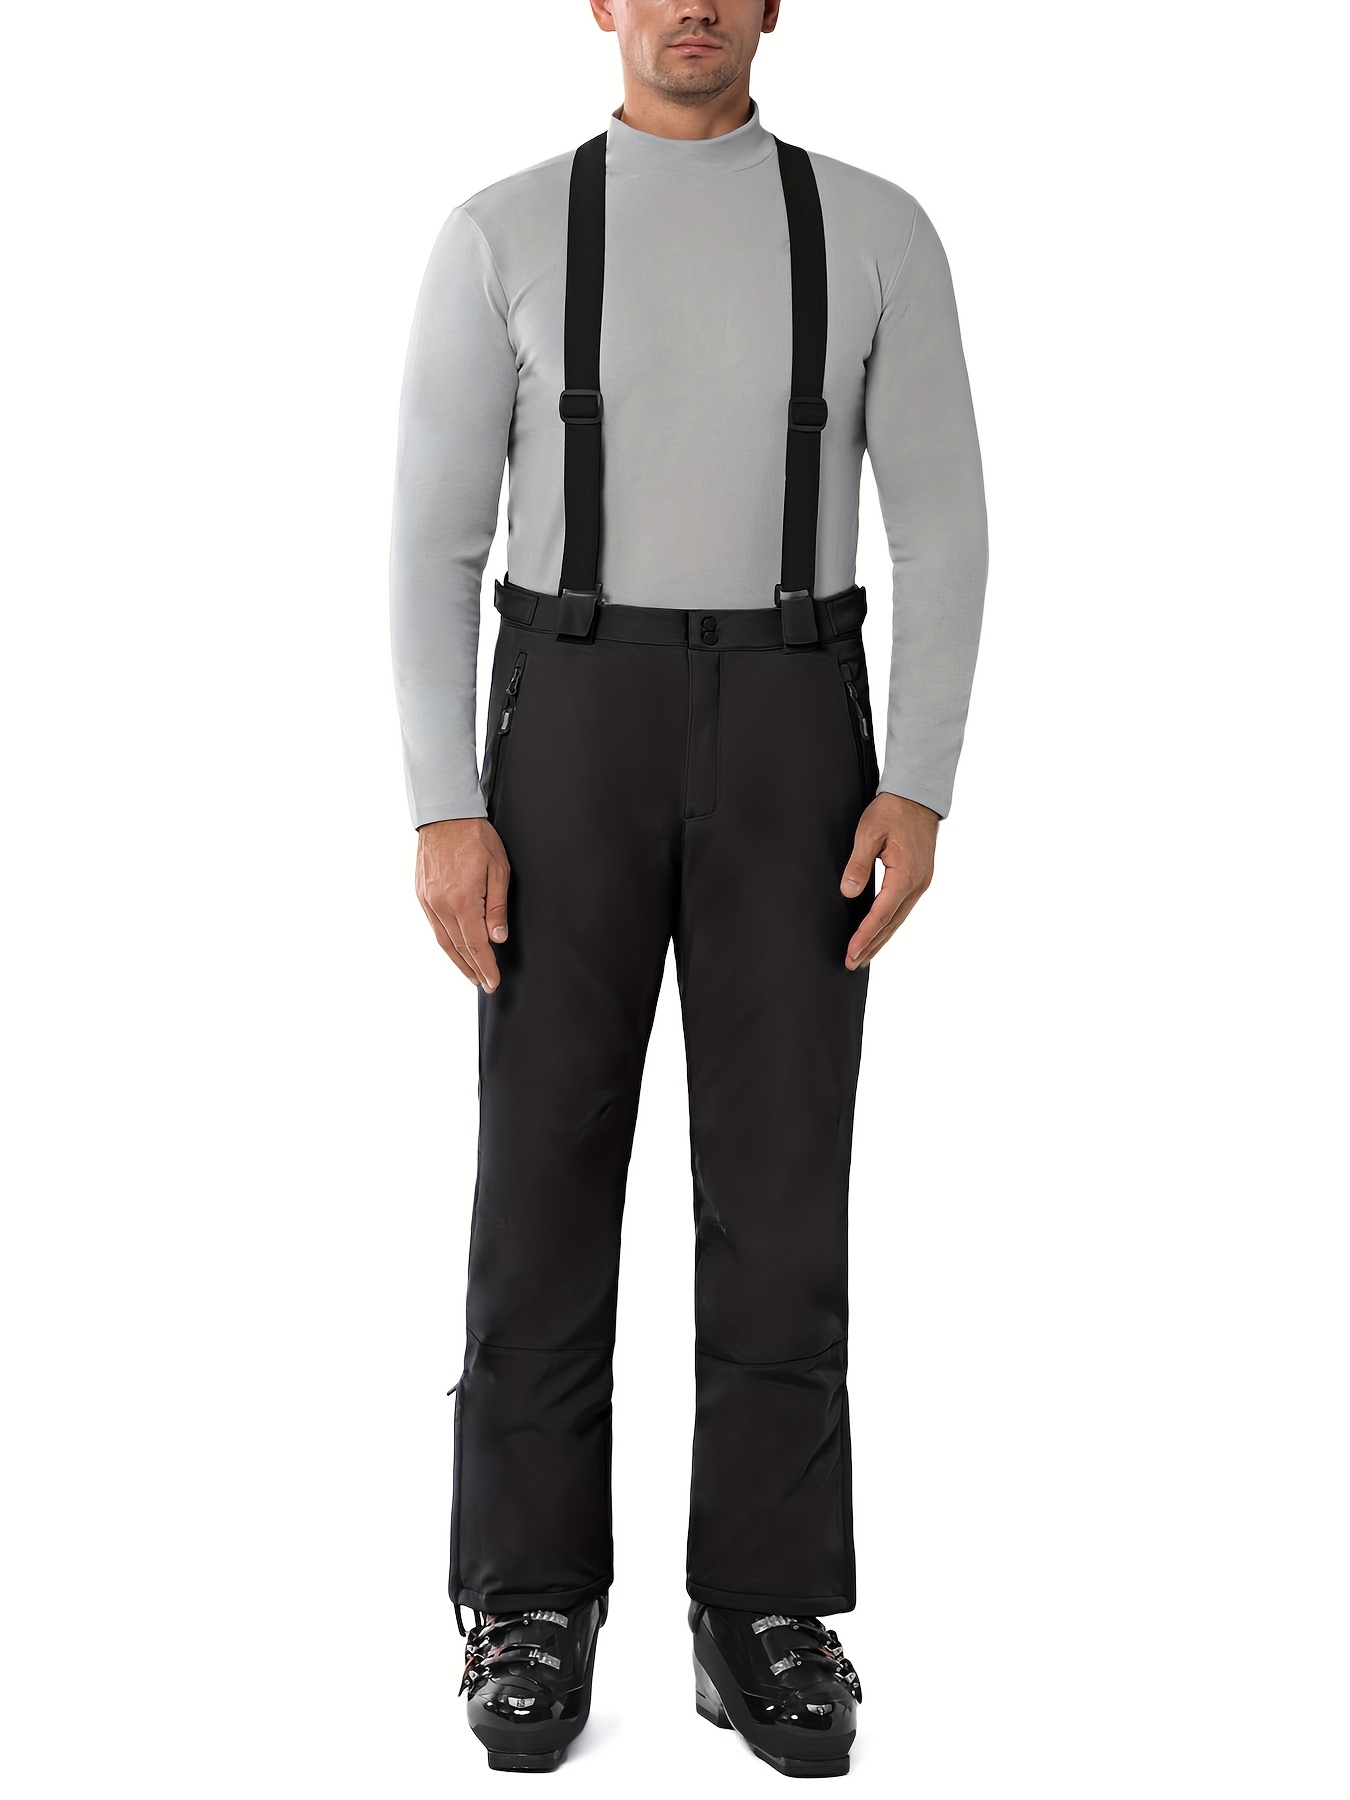 Overalls Suspenders Braces Pants Men's Retro Casual Work Trousers